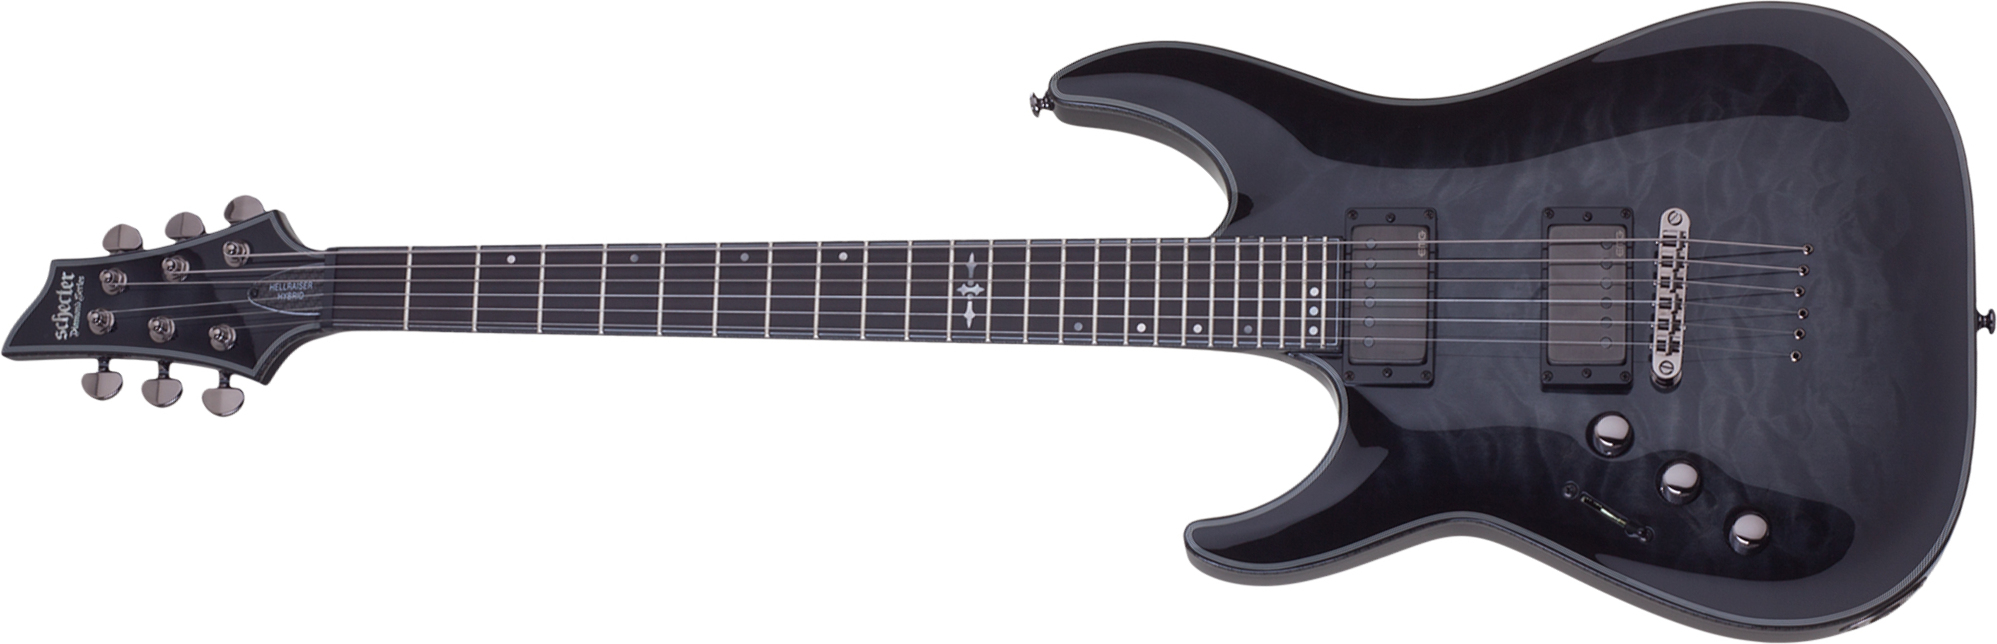 Schecter C-1 Hellraiser Hybrid Lh Gaucher 2h Emg Ht Eb - Trans. Black Burst - Left-handed electric guitar - Main picture